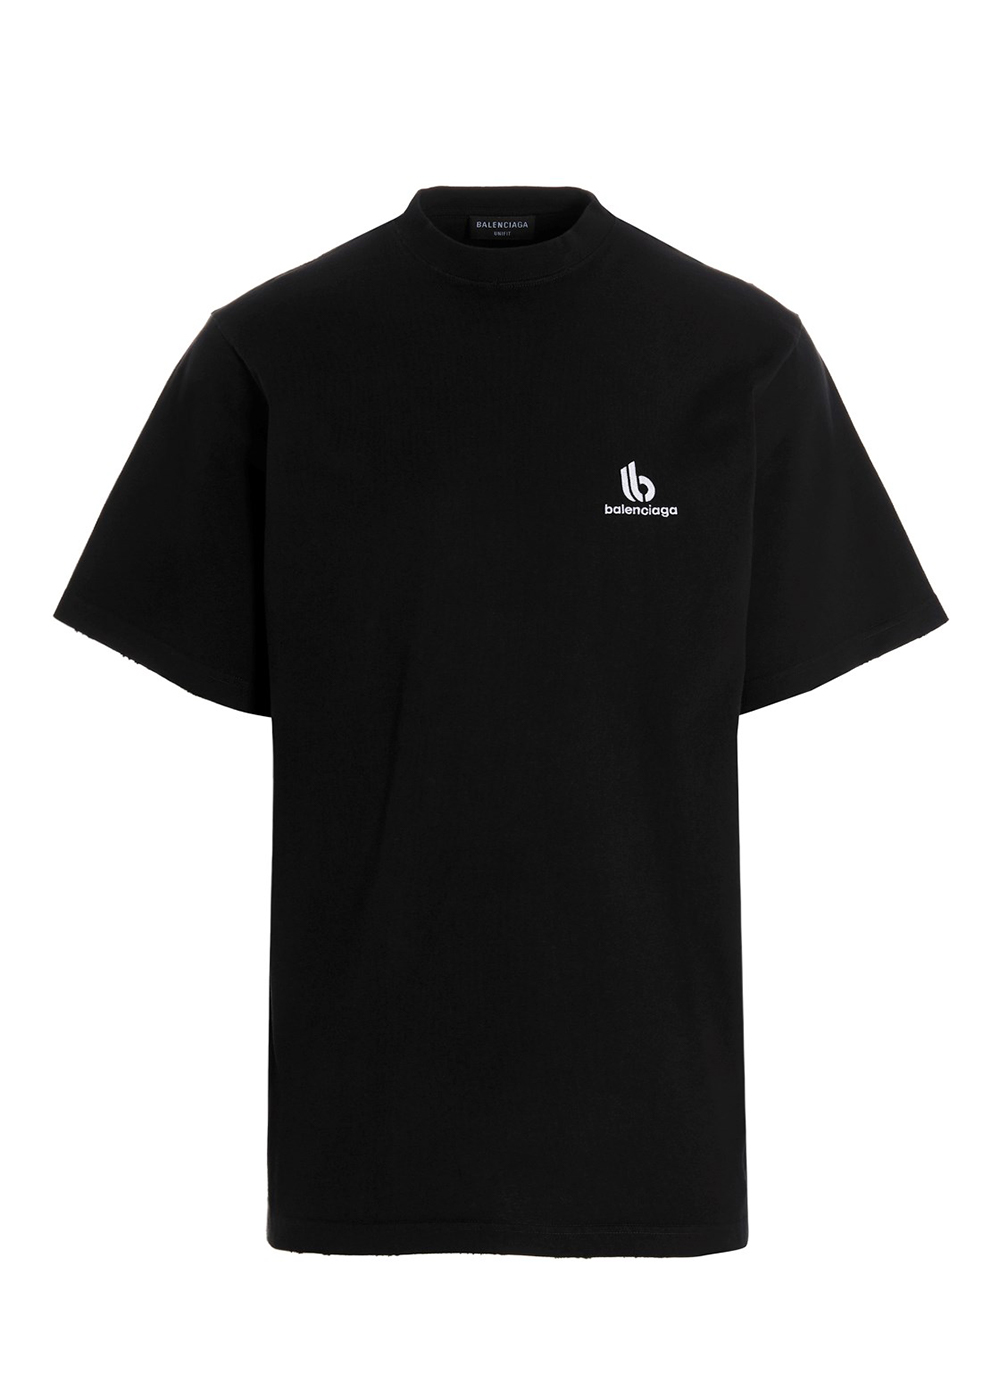 Balenciaga Embroidered Double B Logo T-Shirt Black/White Men's